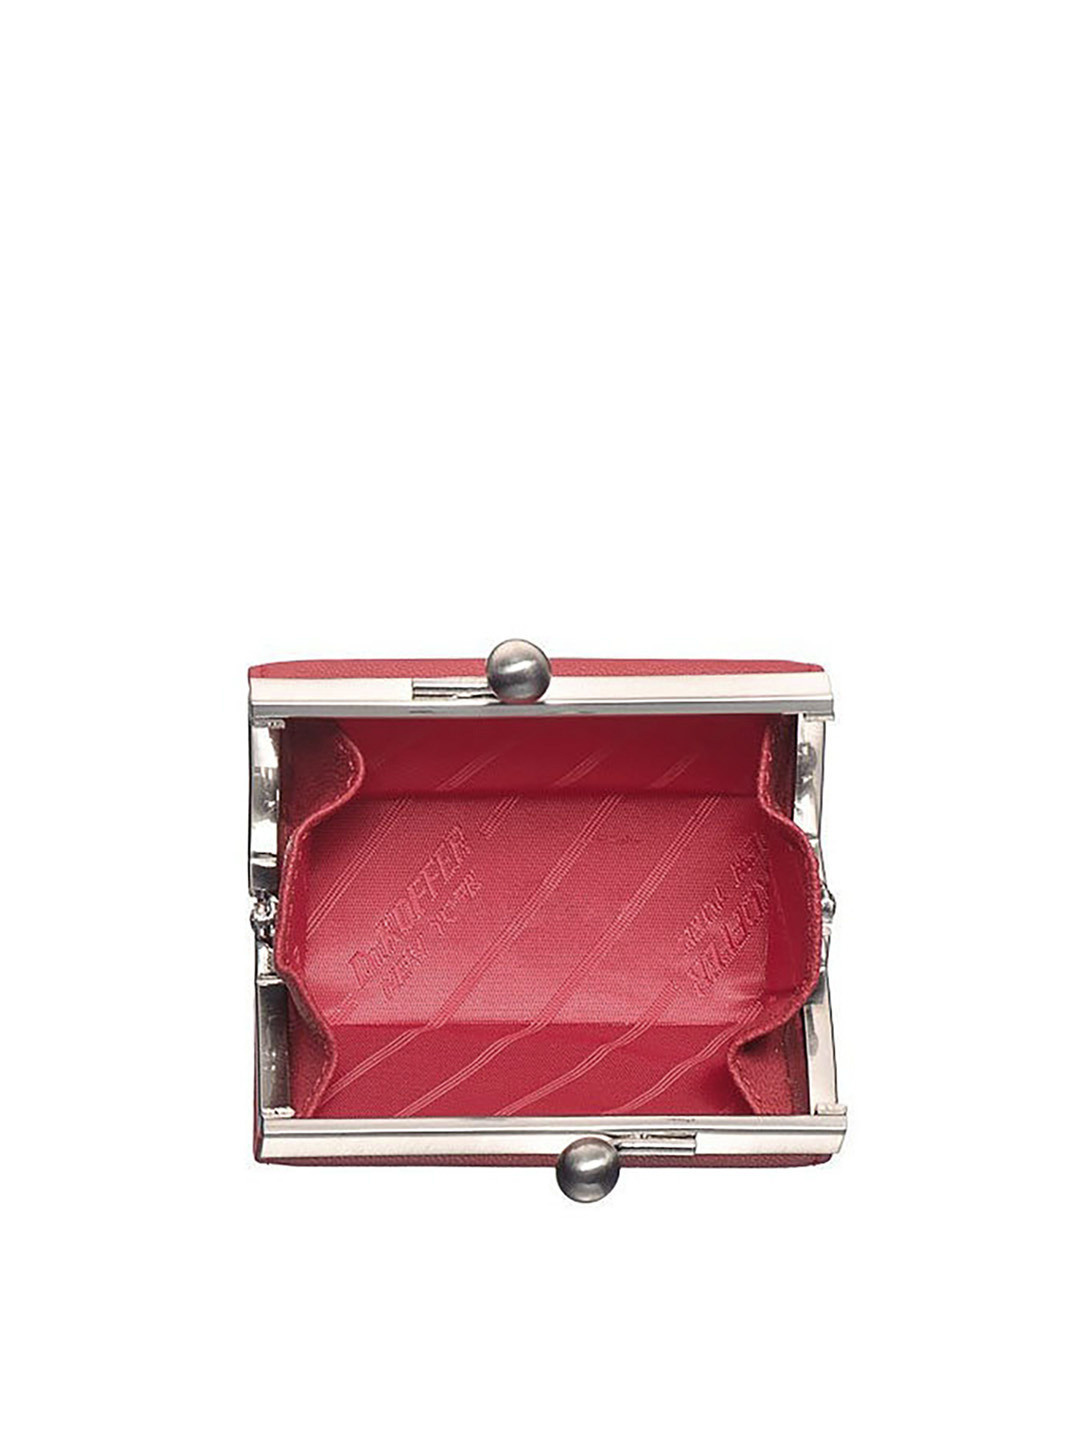 Фото Женская мини-шкатулка для драгоценностей из мягкой кожи с тиснением под ската Косметички